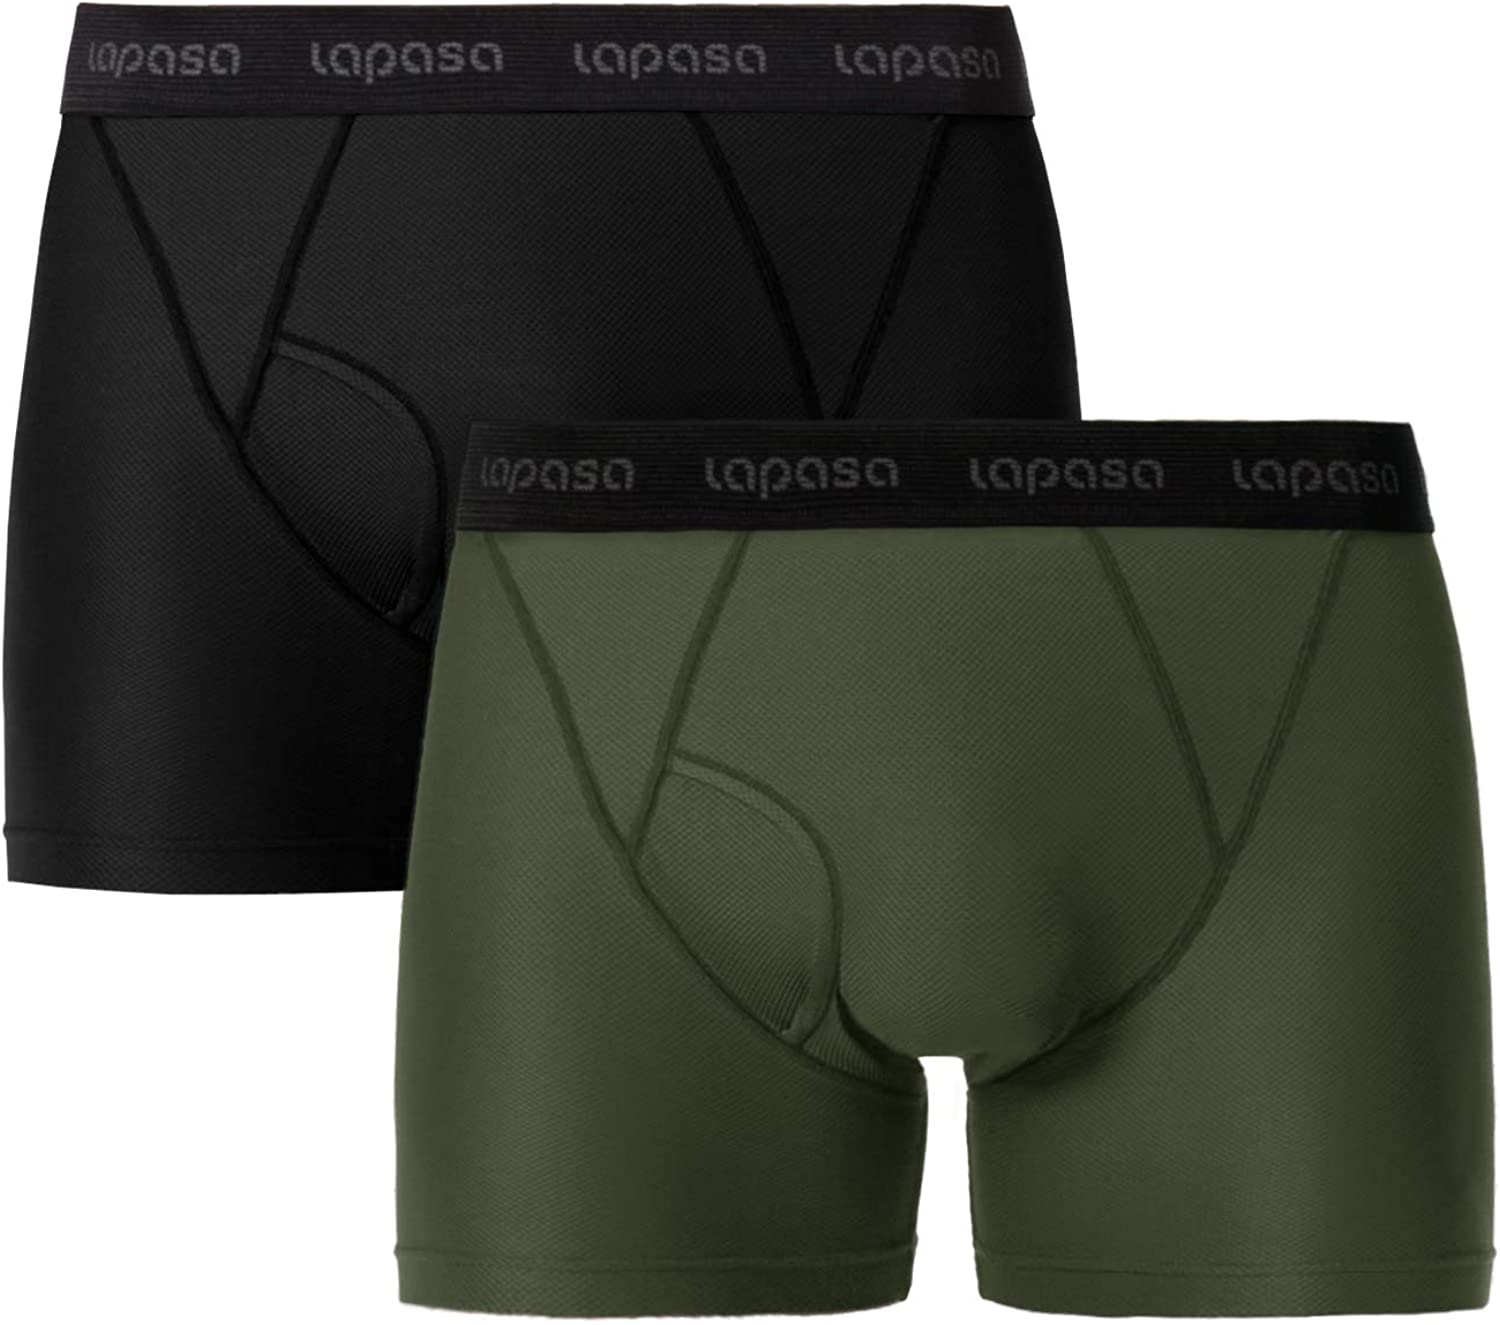 LAPASA Men's Sports Briefs Anti Chafing Underwear Quick Dry Travel  Undershorts L 